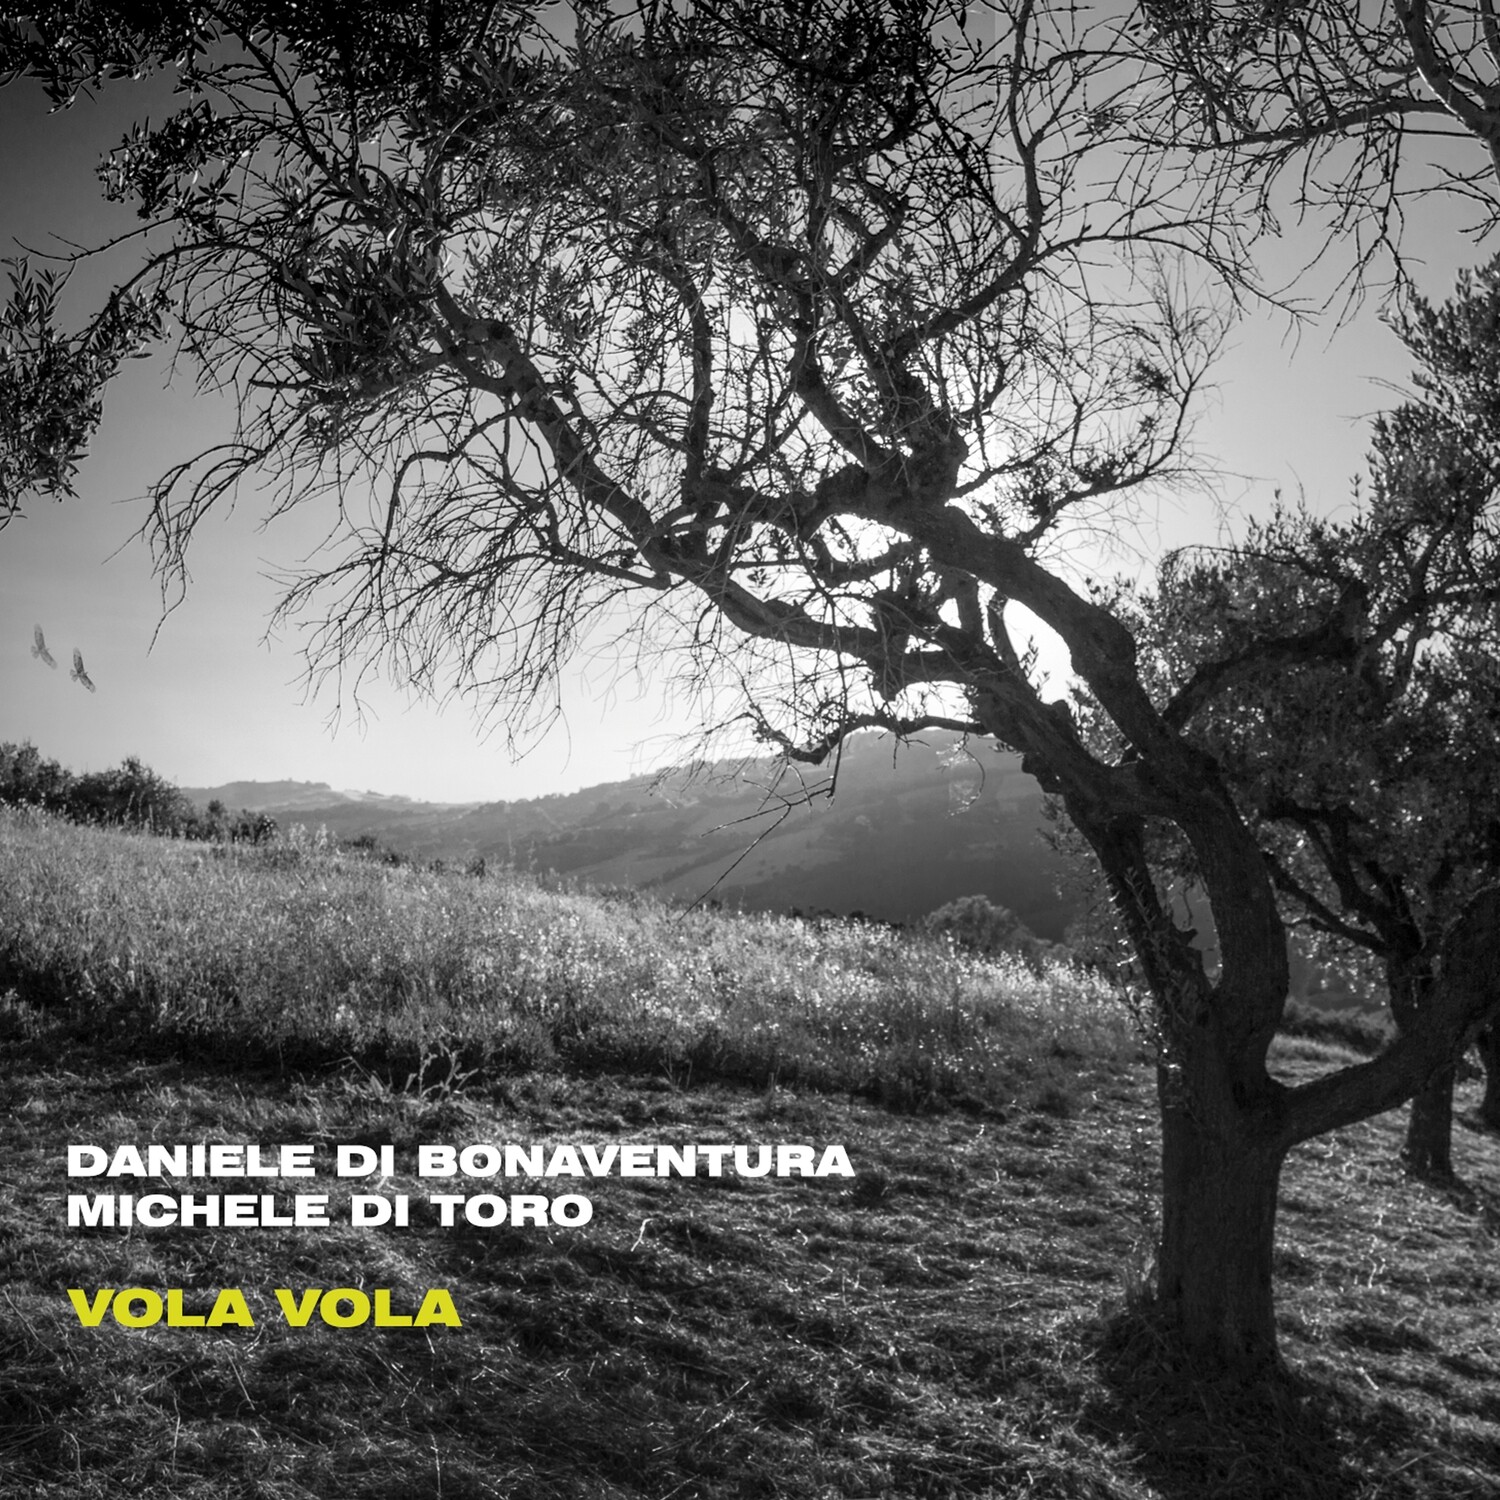 DANIELE DI BONAVENTURA & MICHELE DI TORO «Vola vola»